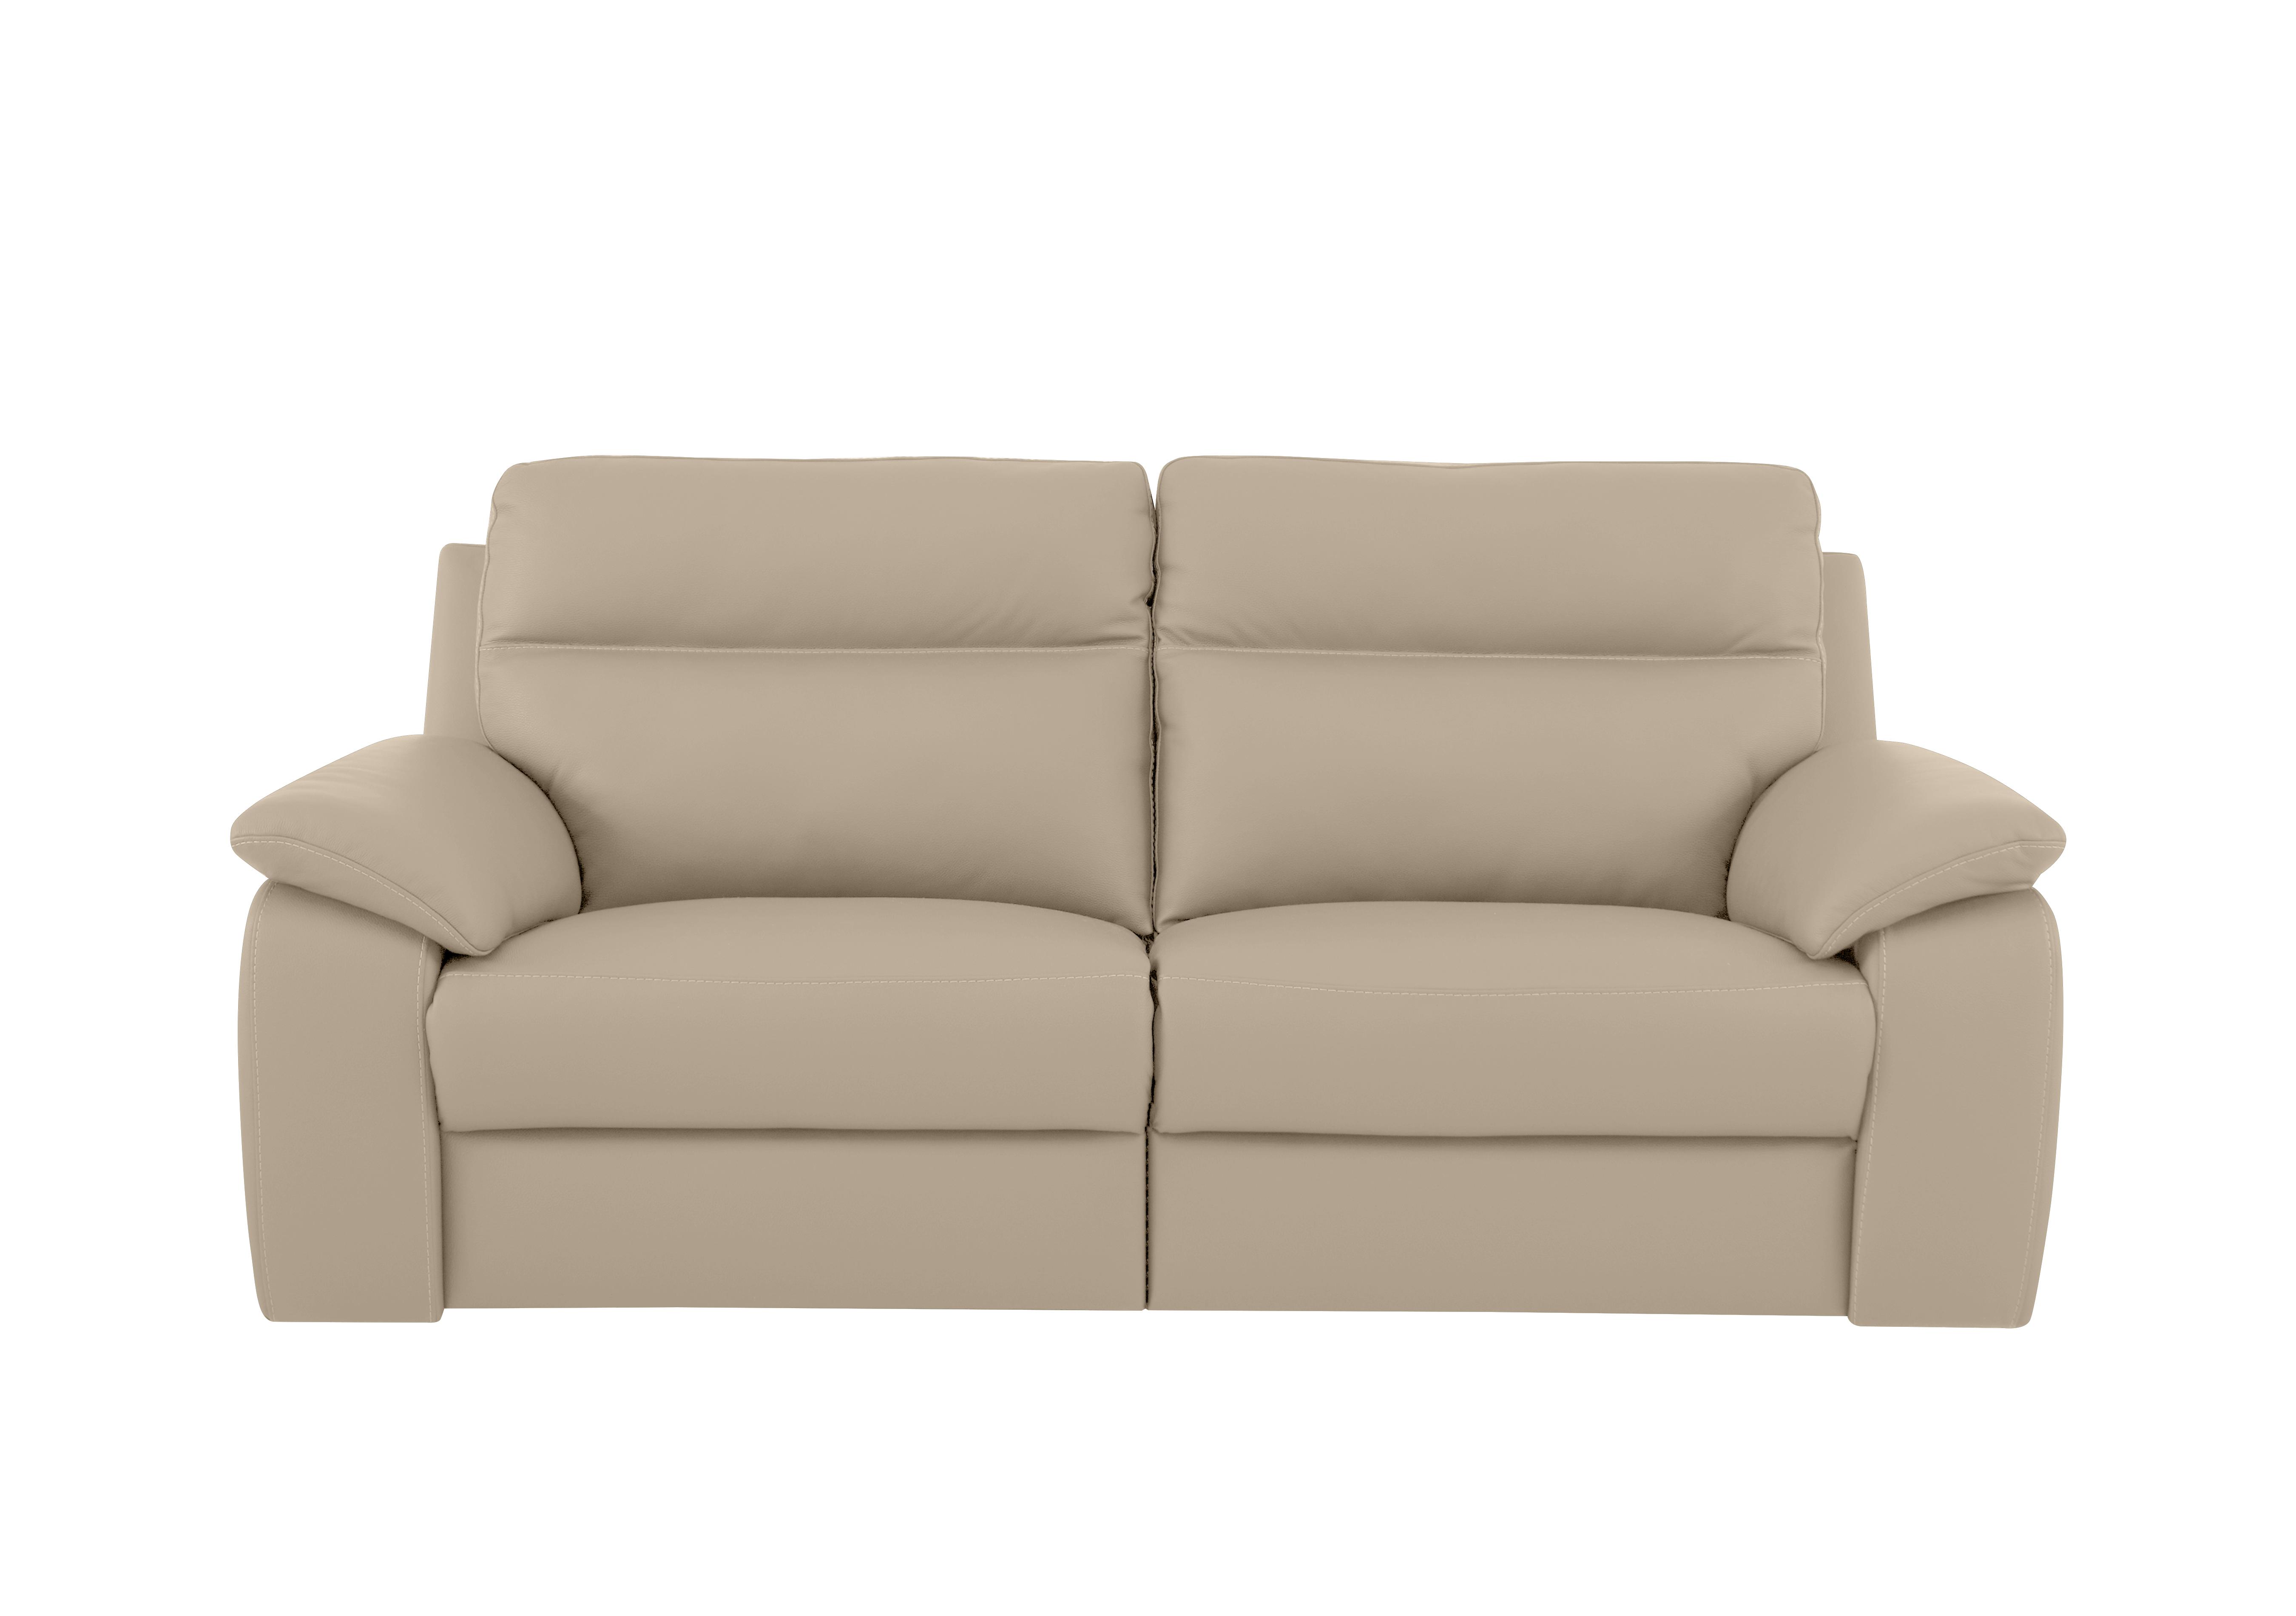 Pepino 3 Seater Leather Sofa in 352 Torello Fango on Furniture Village